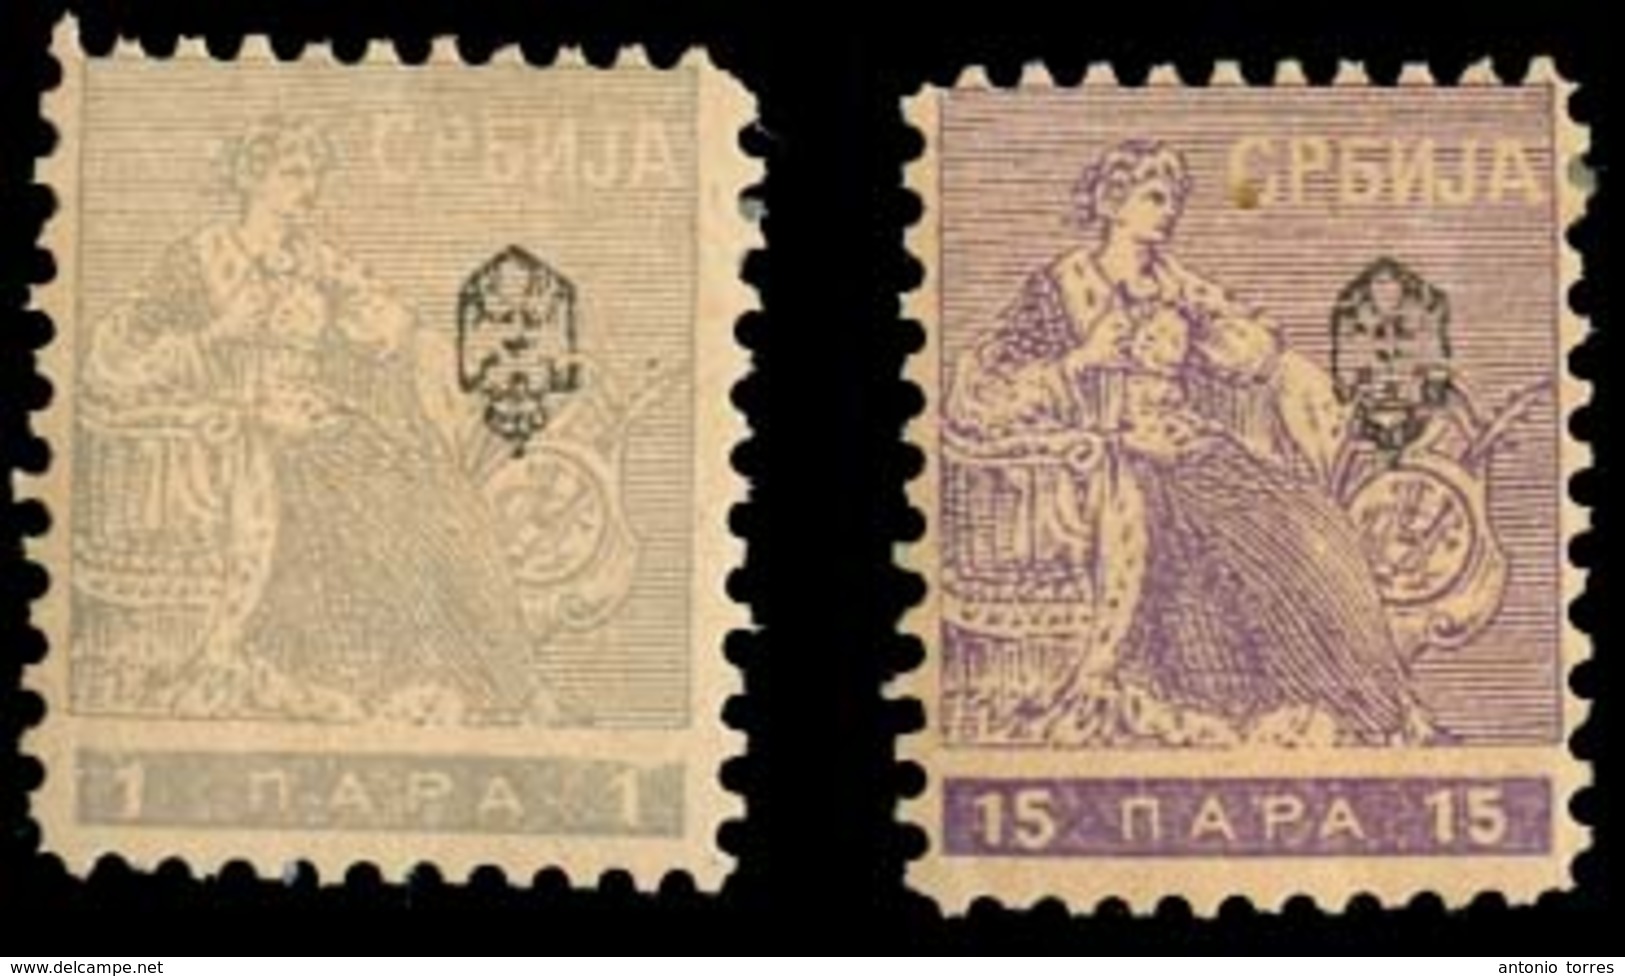 SERBIA. 1911. Newspaper Stamps. Yv TJ - 1*, 4*. 2 Ovptd Values, 1p + 15p Inverted Overprint. Fine Mint. - Serbia